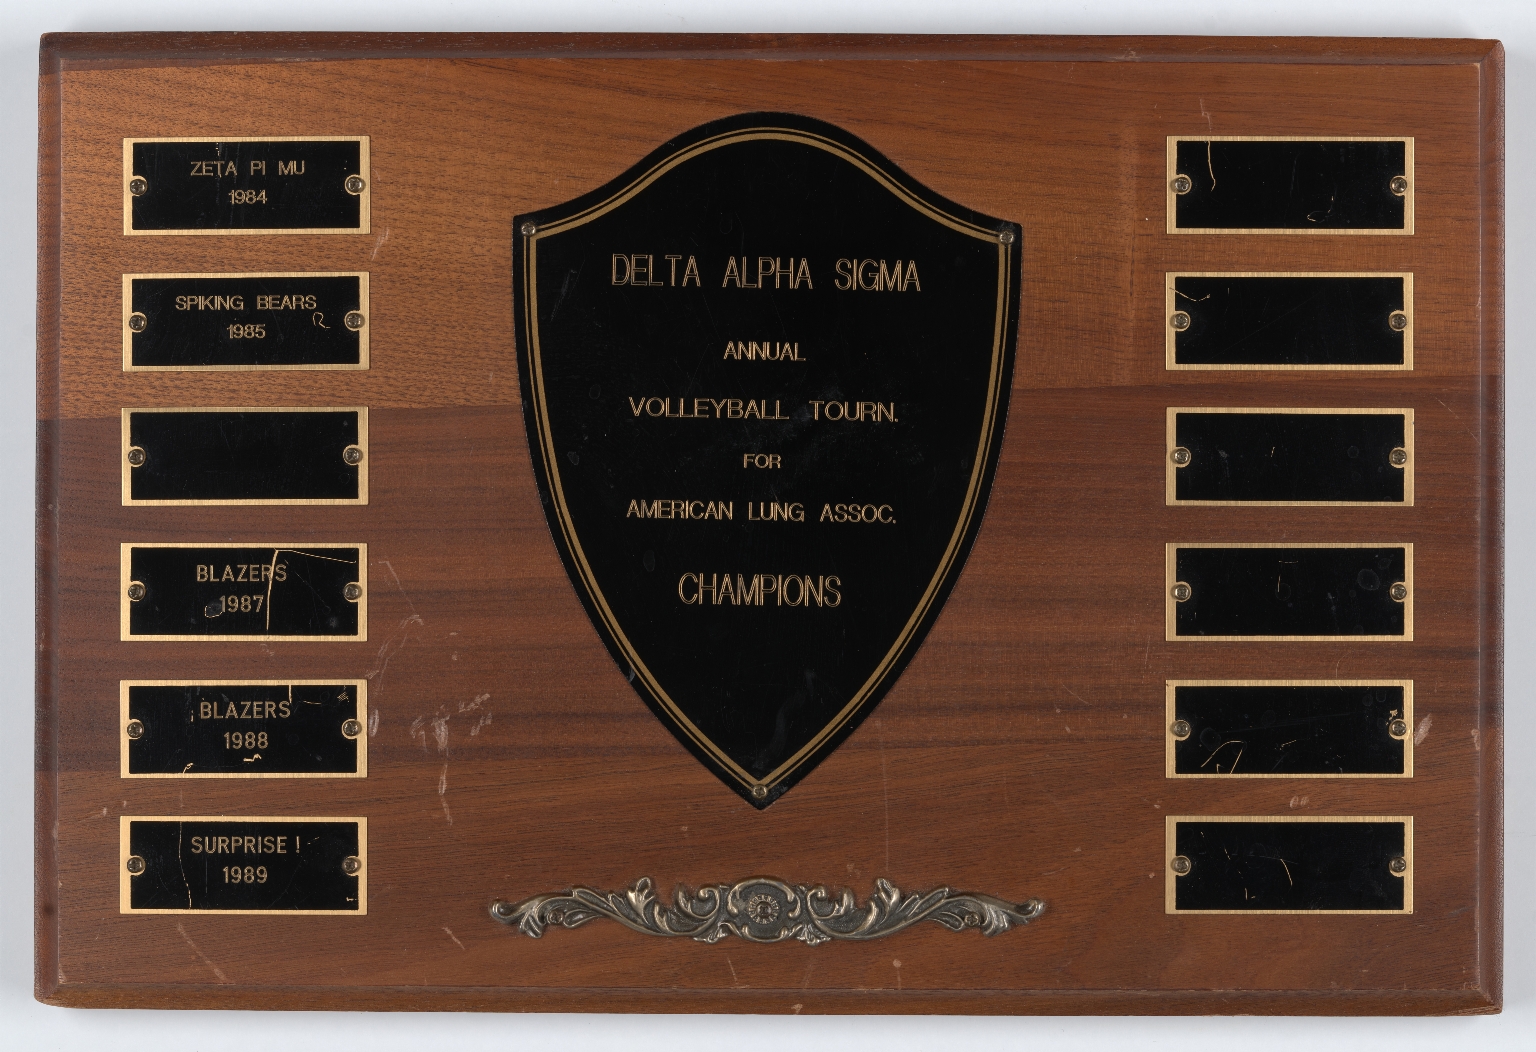 Delta Alpha Sigma Volleyball Tournament Champions plaque